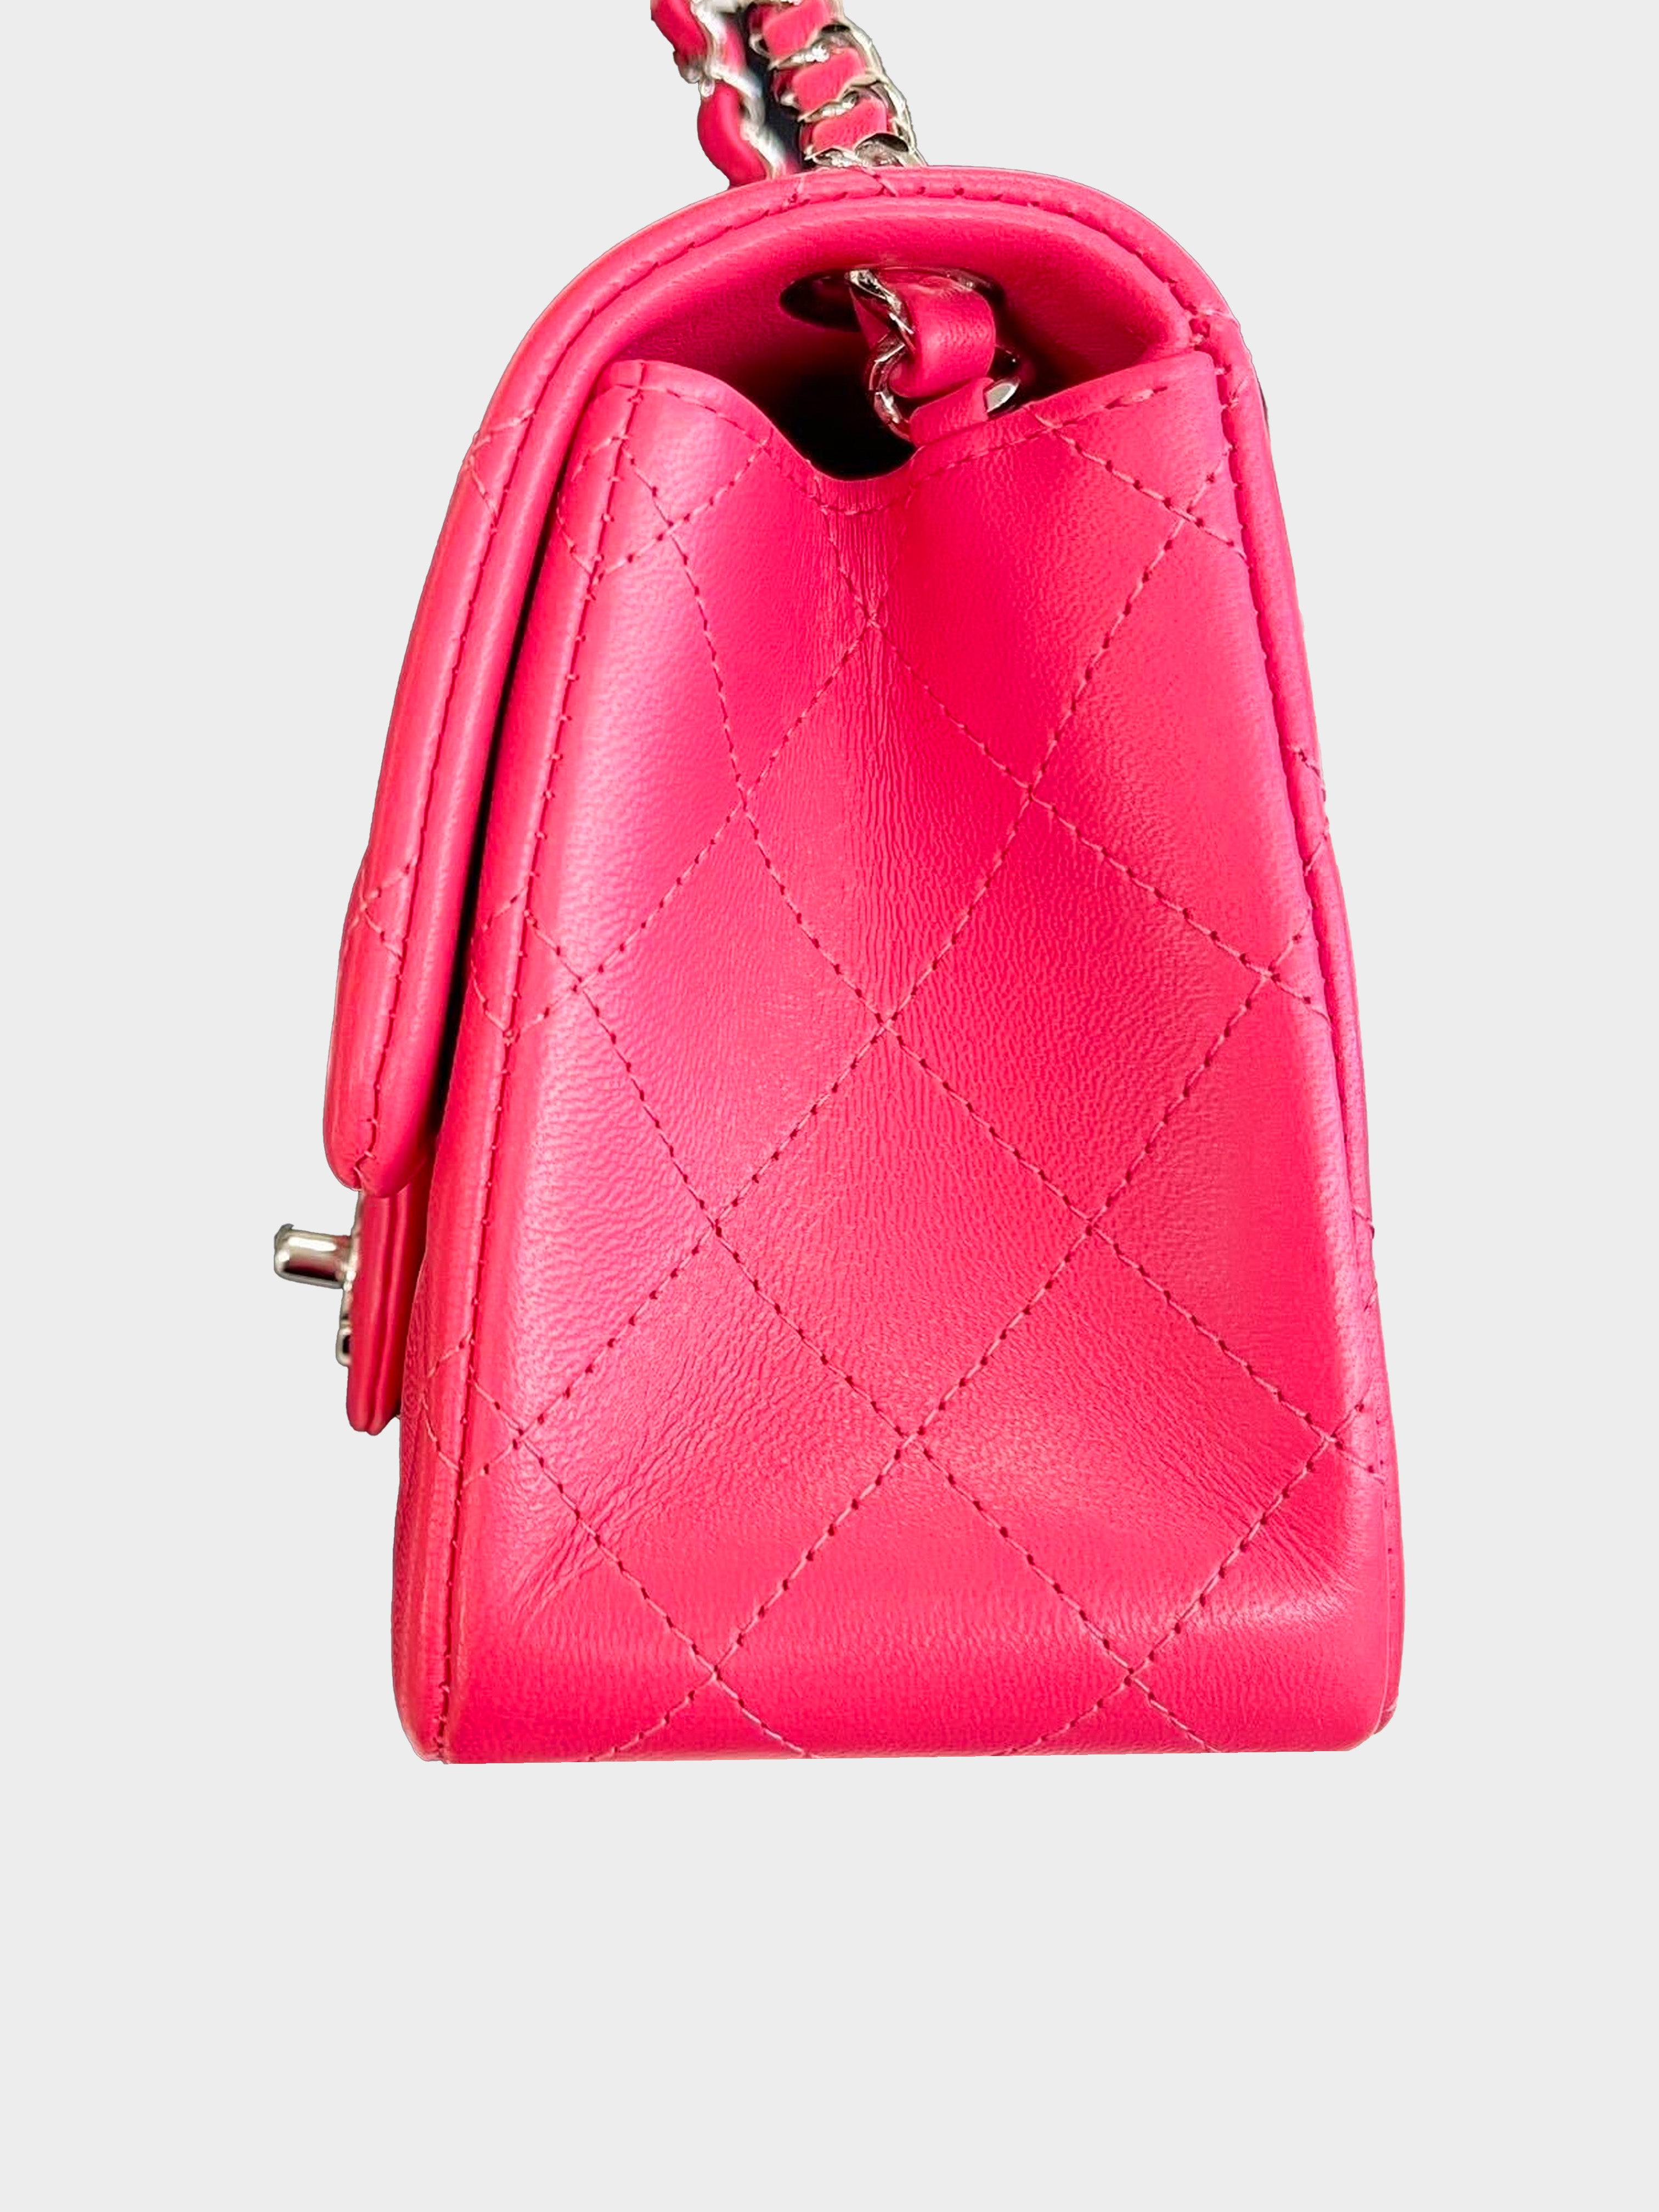 CHANEL, Bags, Rare Hot Pink Chanel Classic Flap Mini Bag